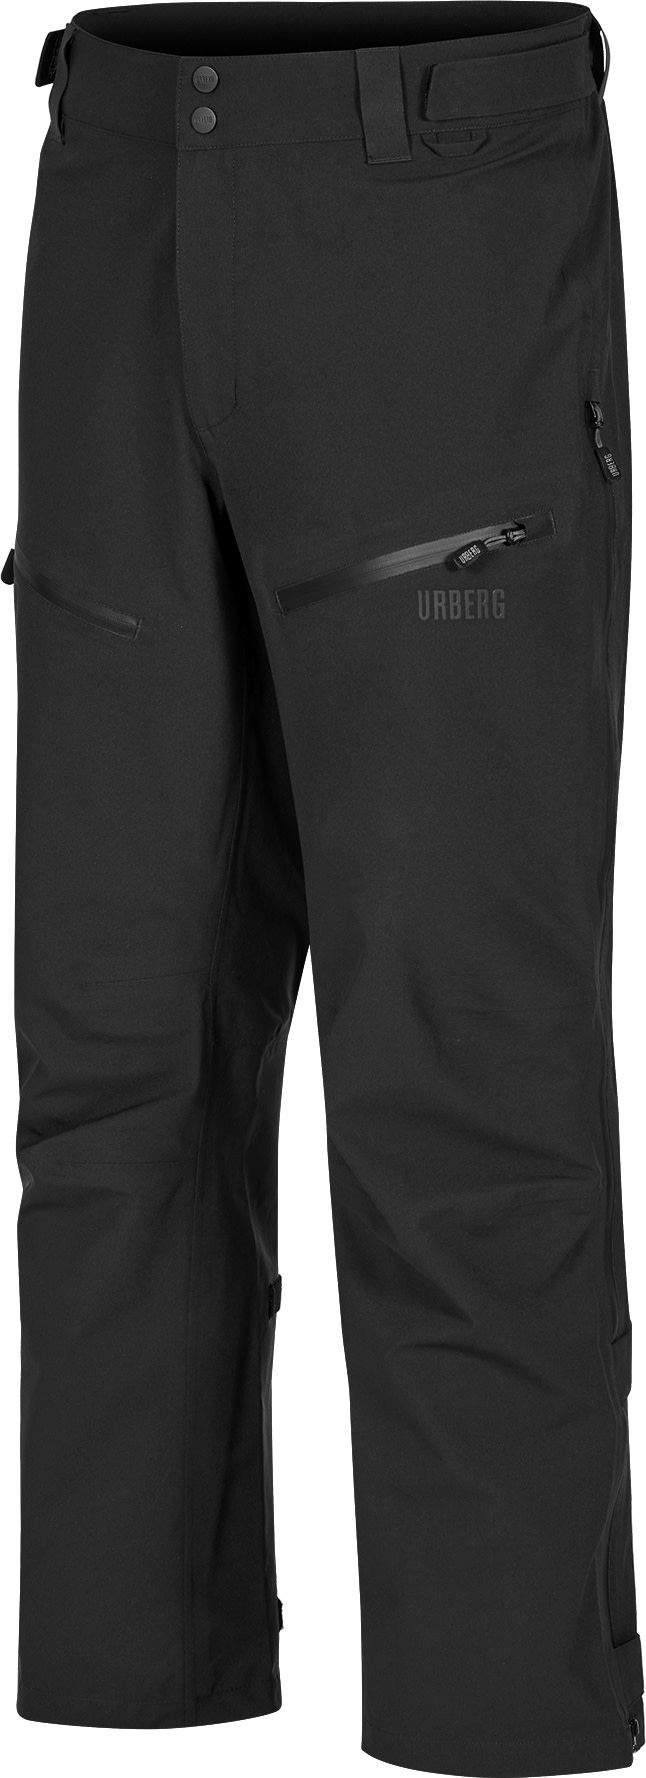 Men's 3L Shell w Sidezip Pants Black beauty Urberg